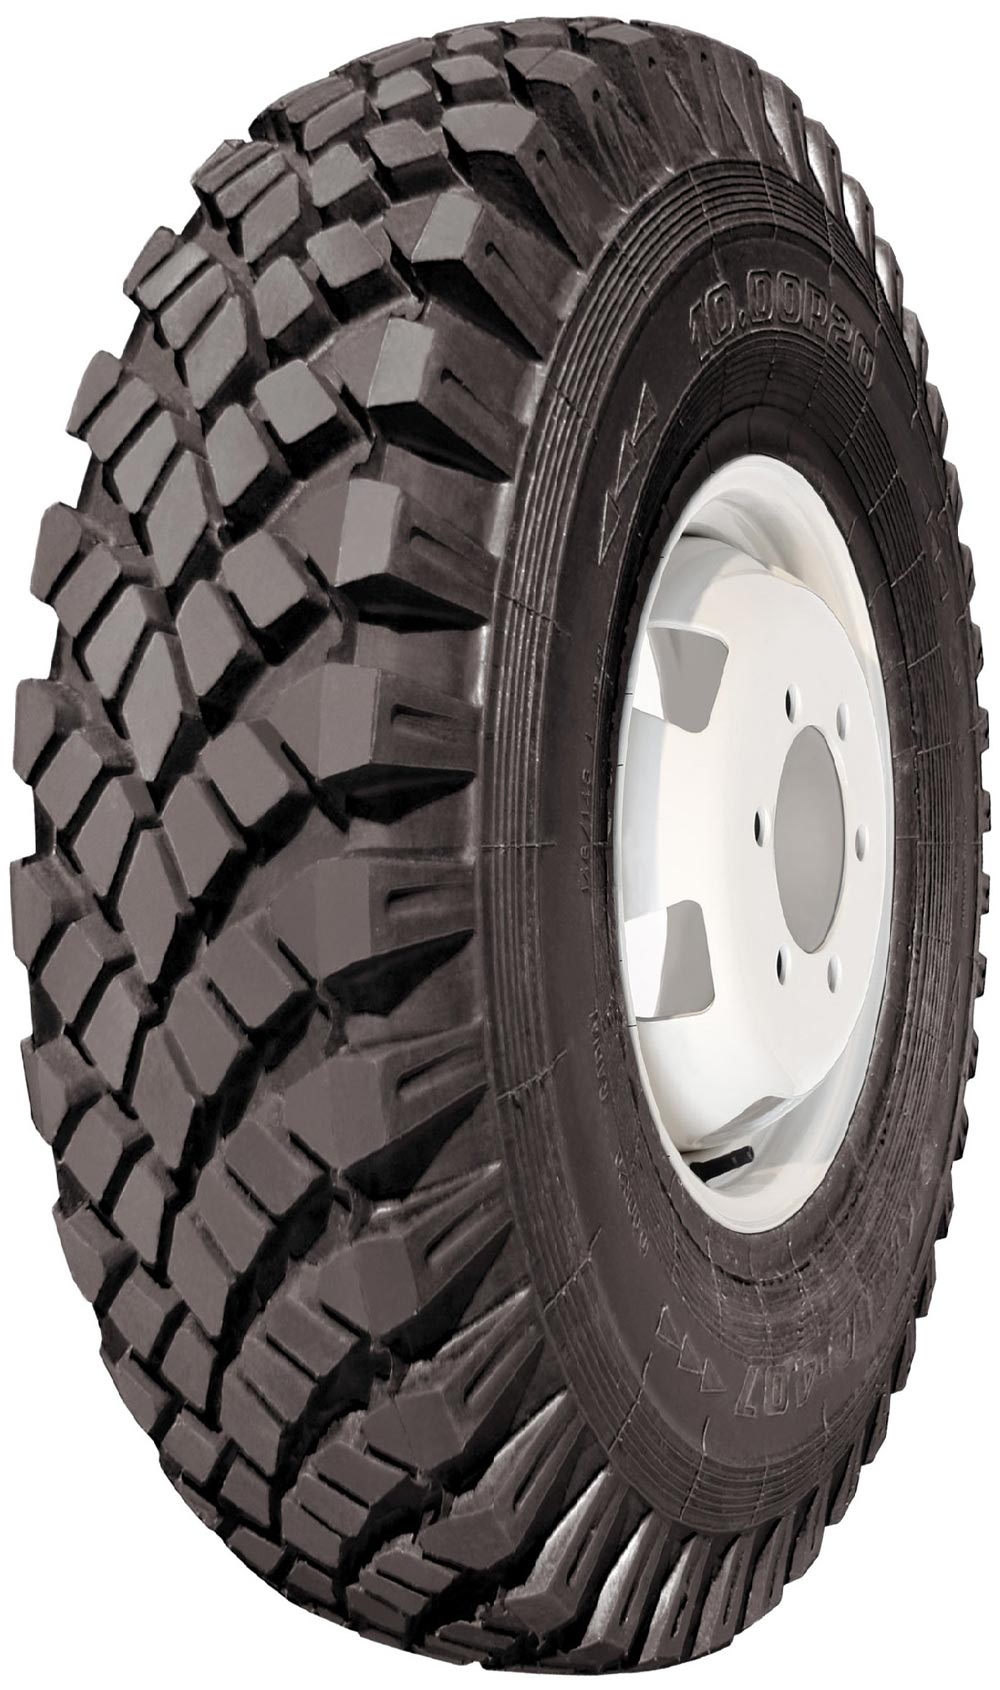 product_type-heavy_tires KAMA 407 10 R20 146J